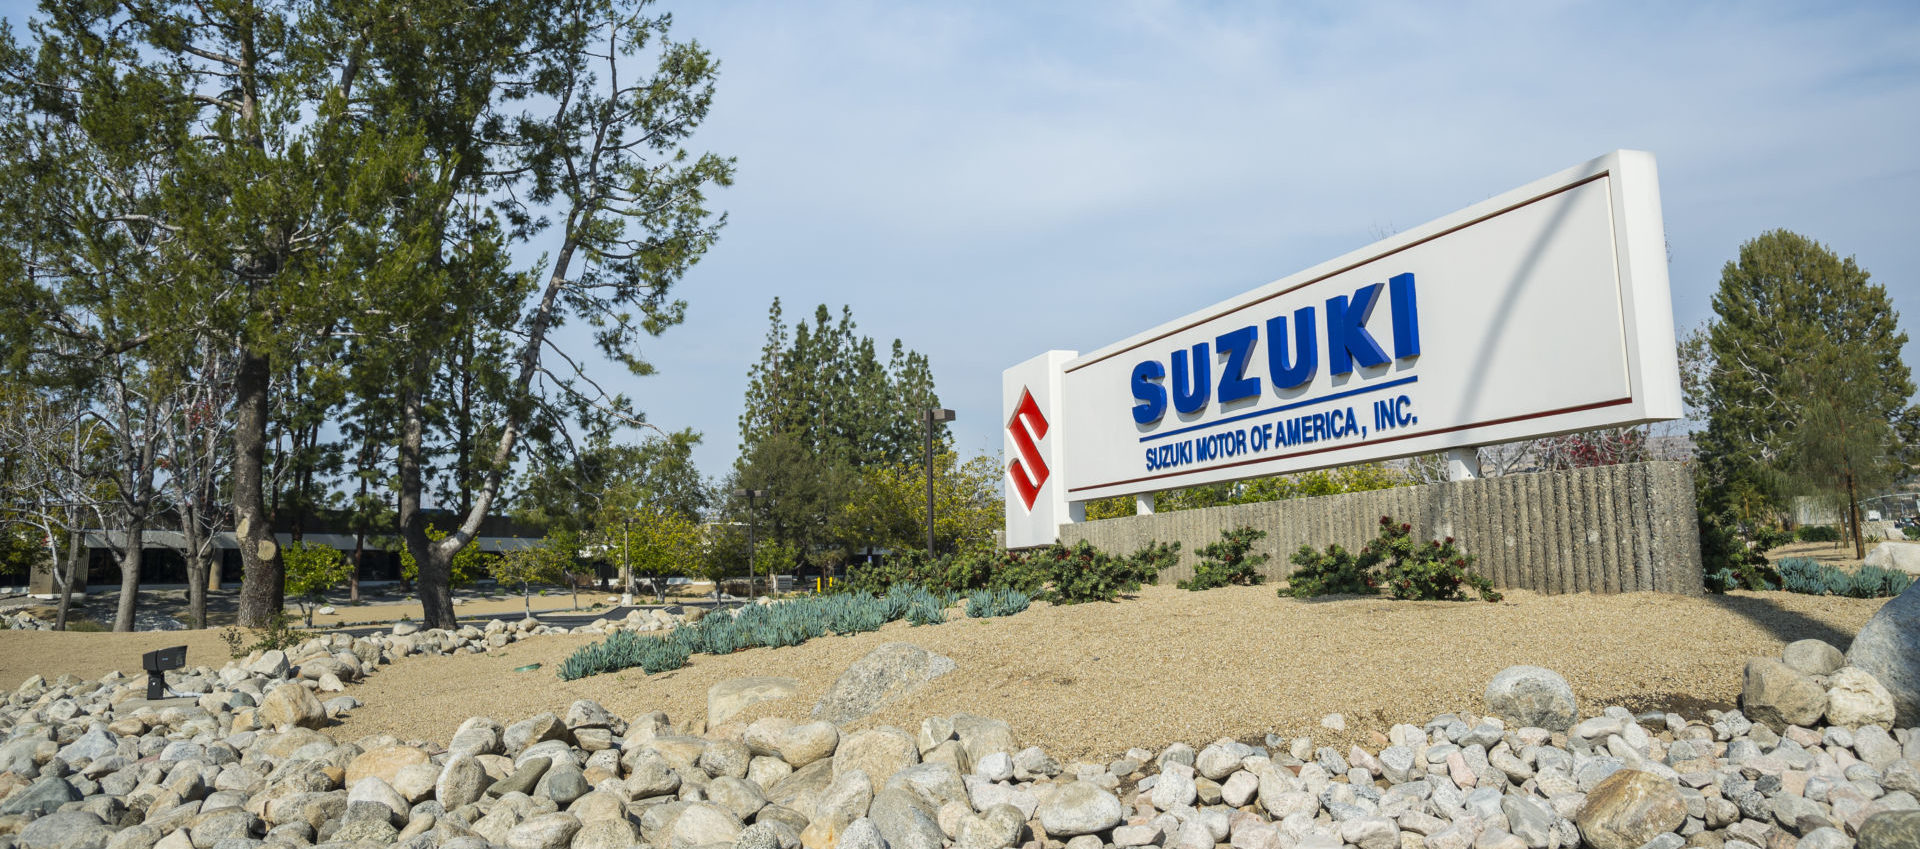 Suzuki Motor of America, Inc. headquarters in Brea, California.